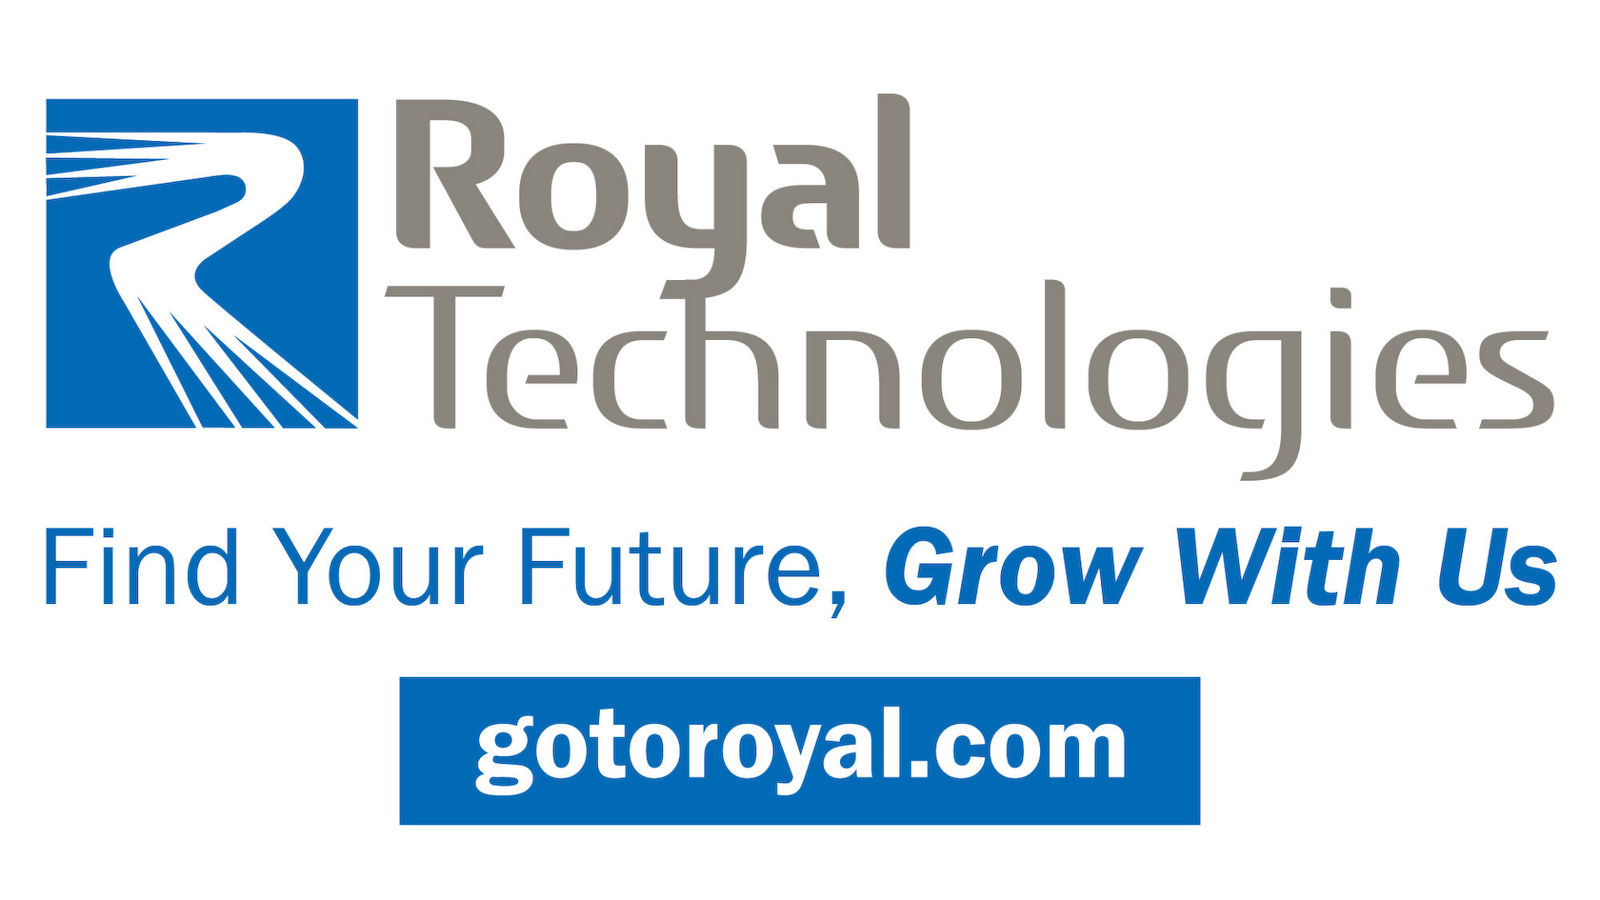 Royal Technologies